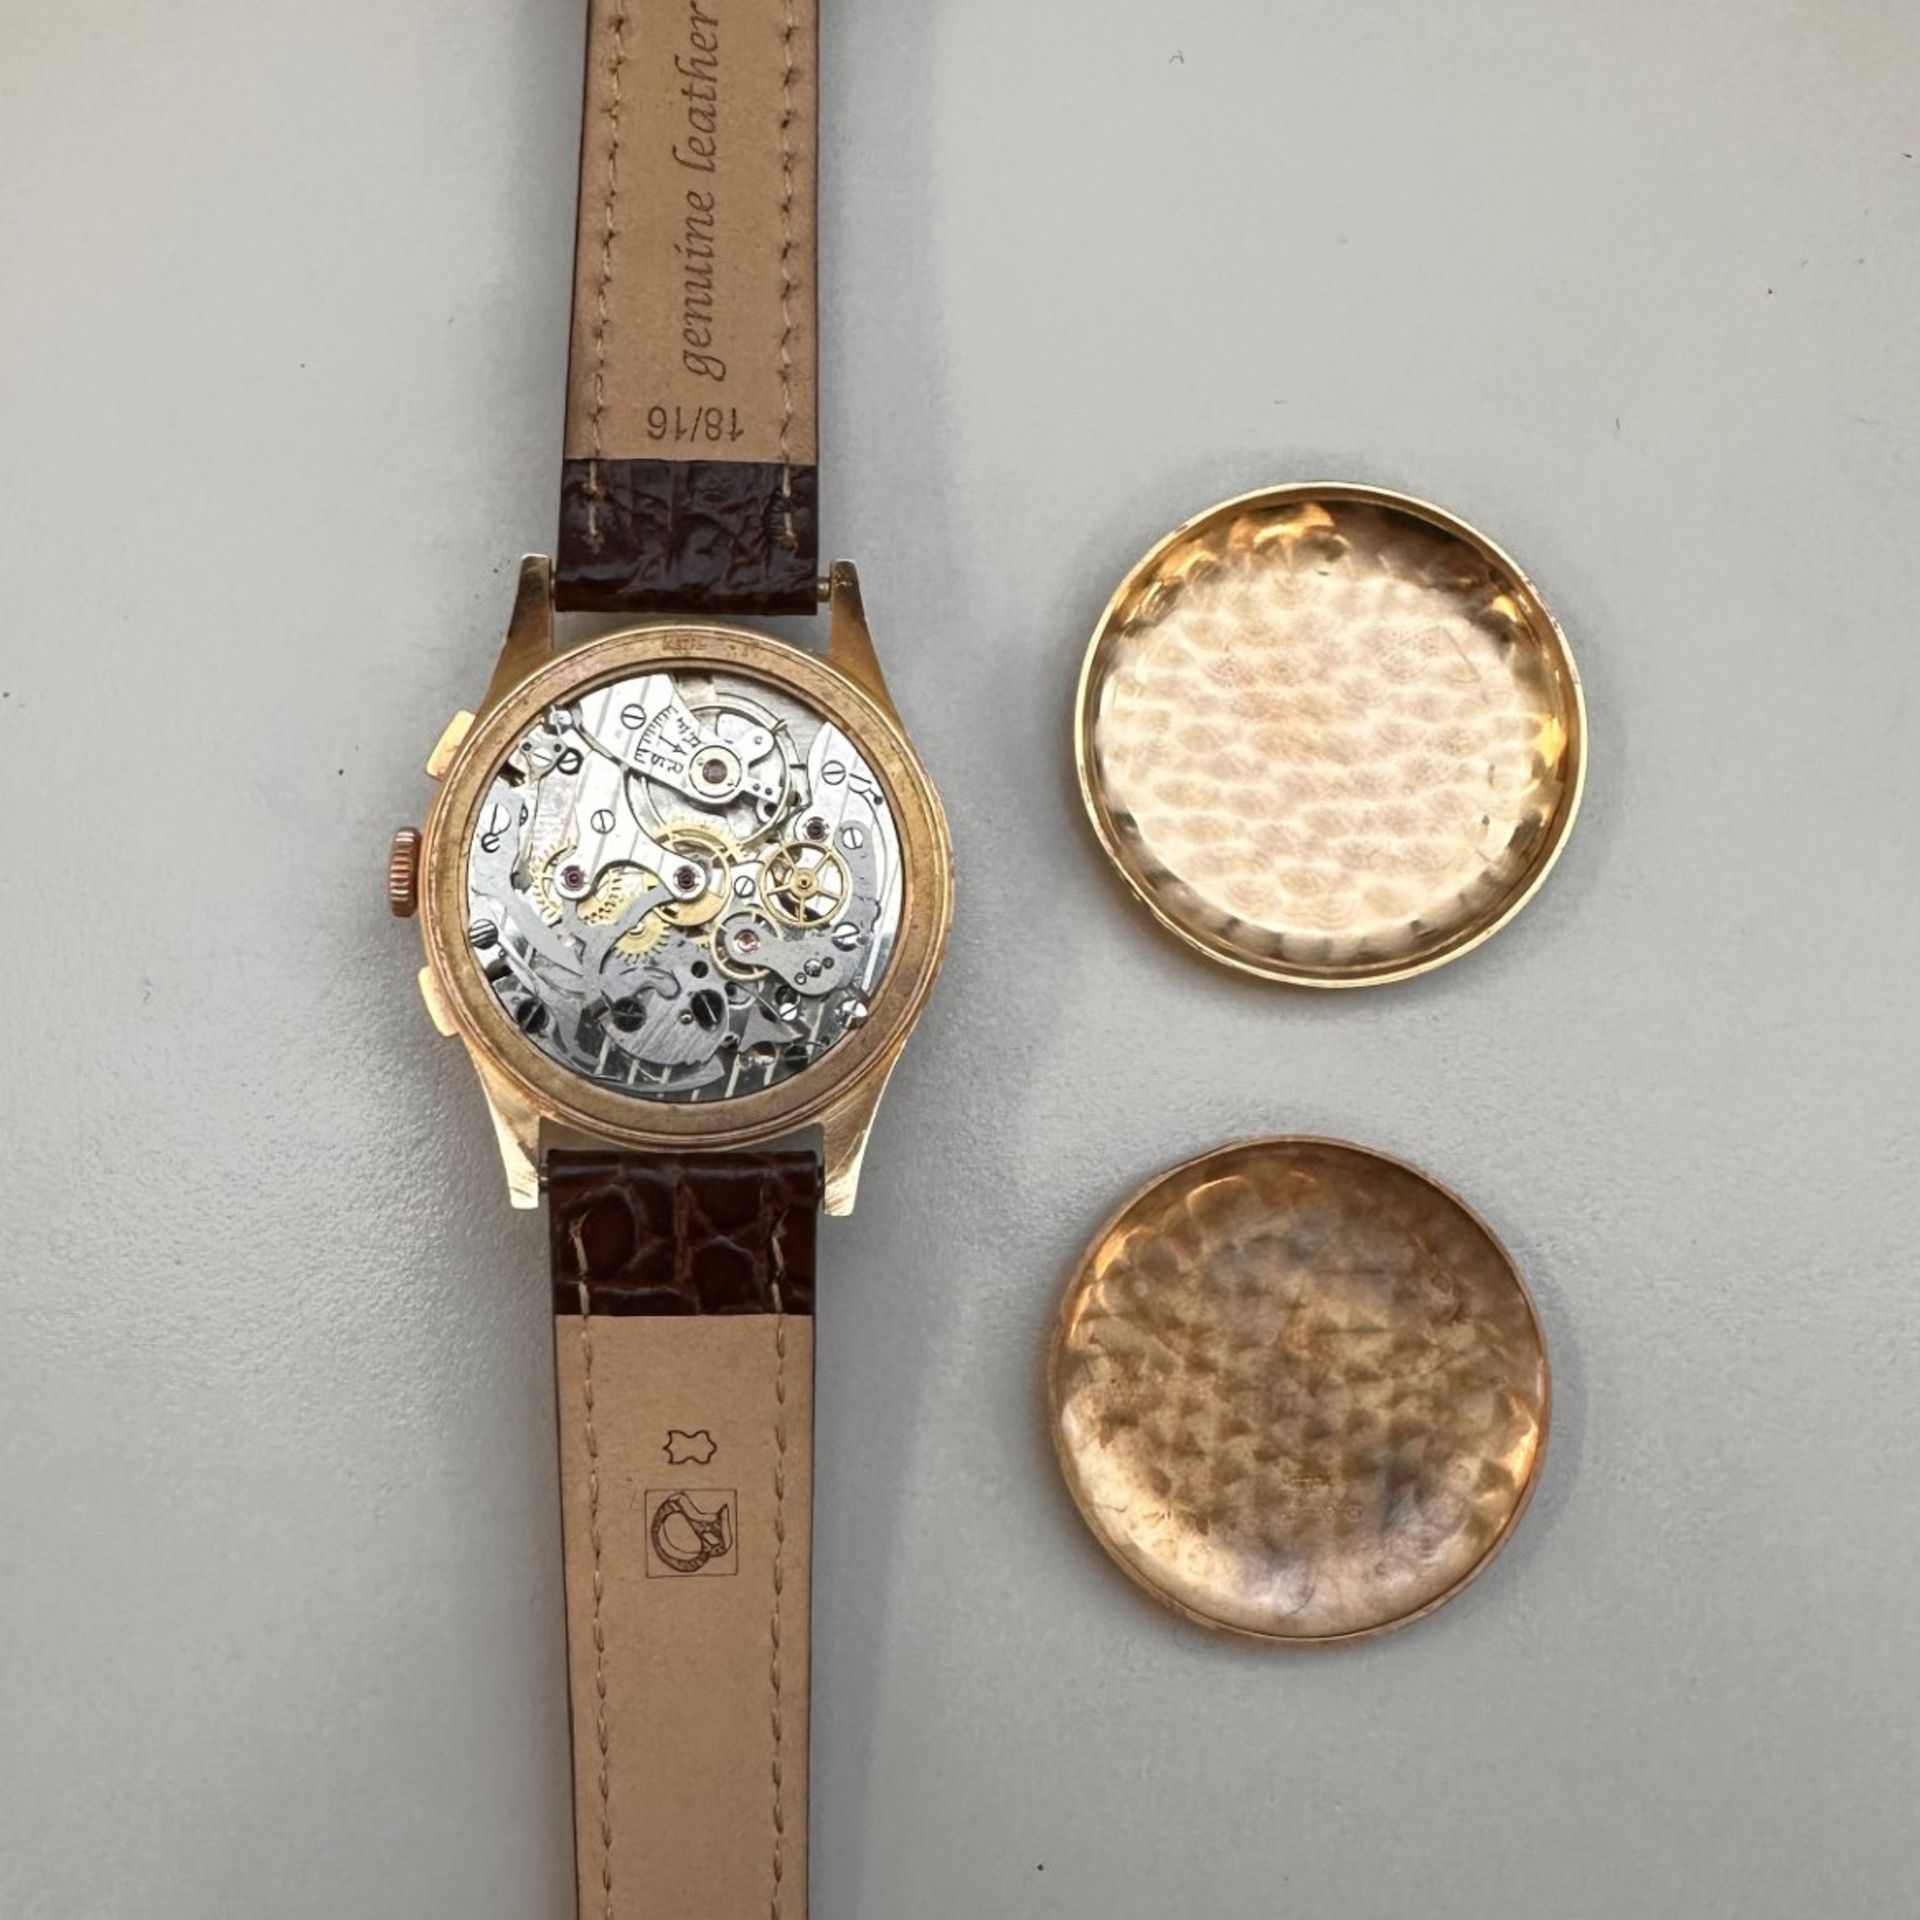 No Reserve - Titus Chronograph Suisse 18K. - Men's watch. - Image 6 of 6